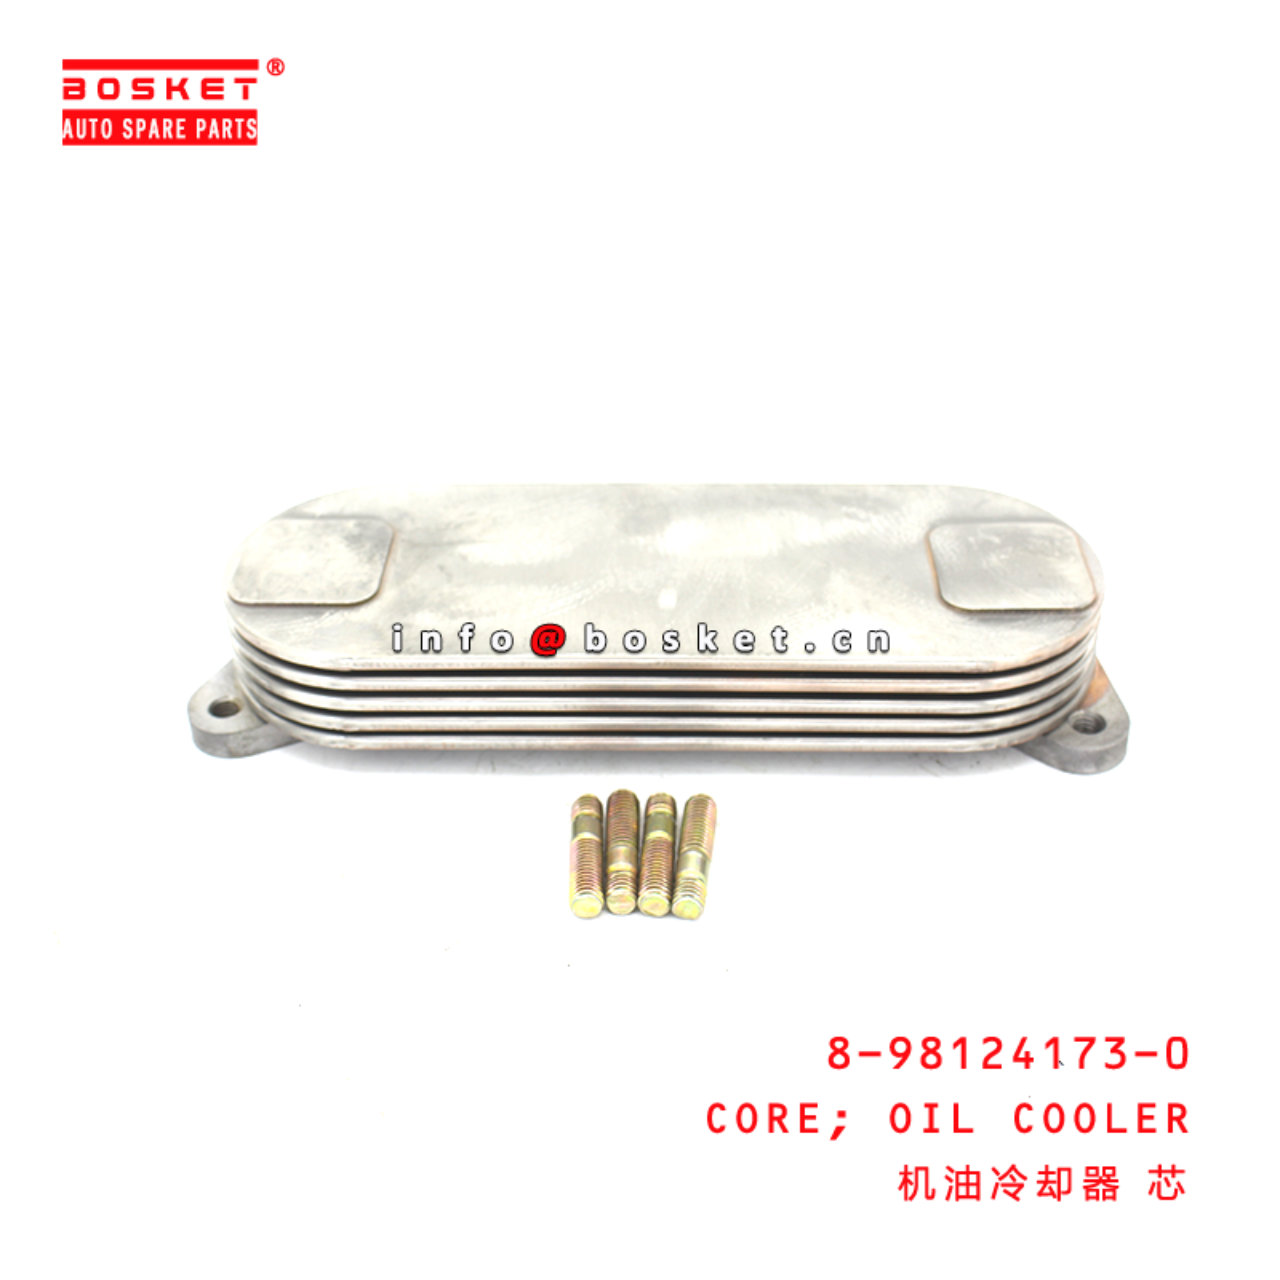 8-98124173-0 Oil Cooler Core suitable for ISUZU DM...